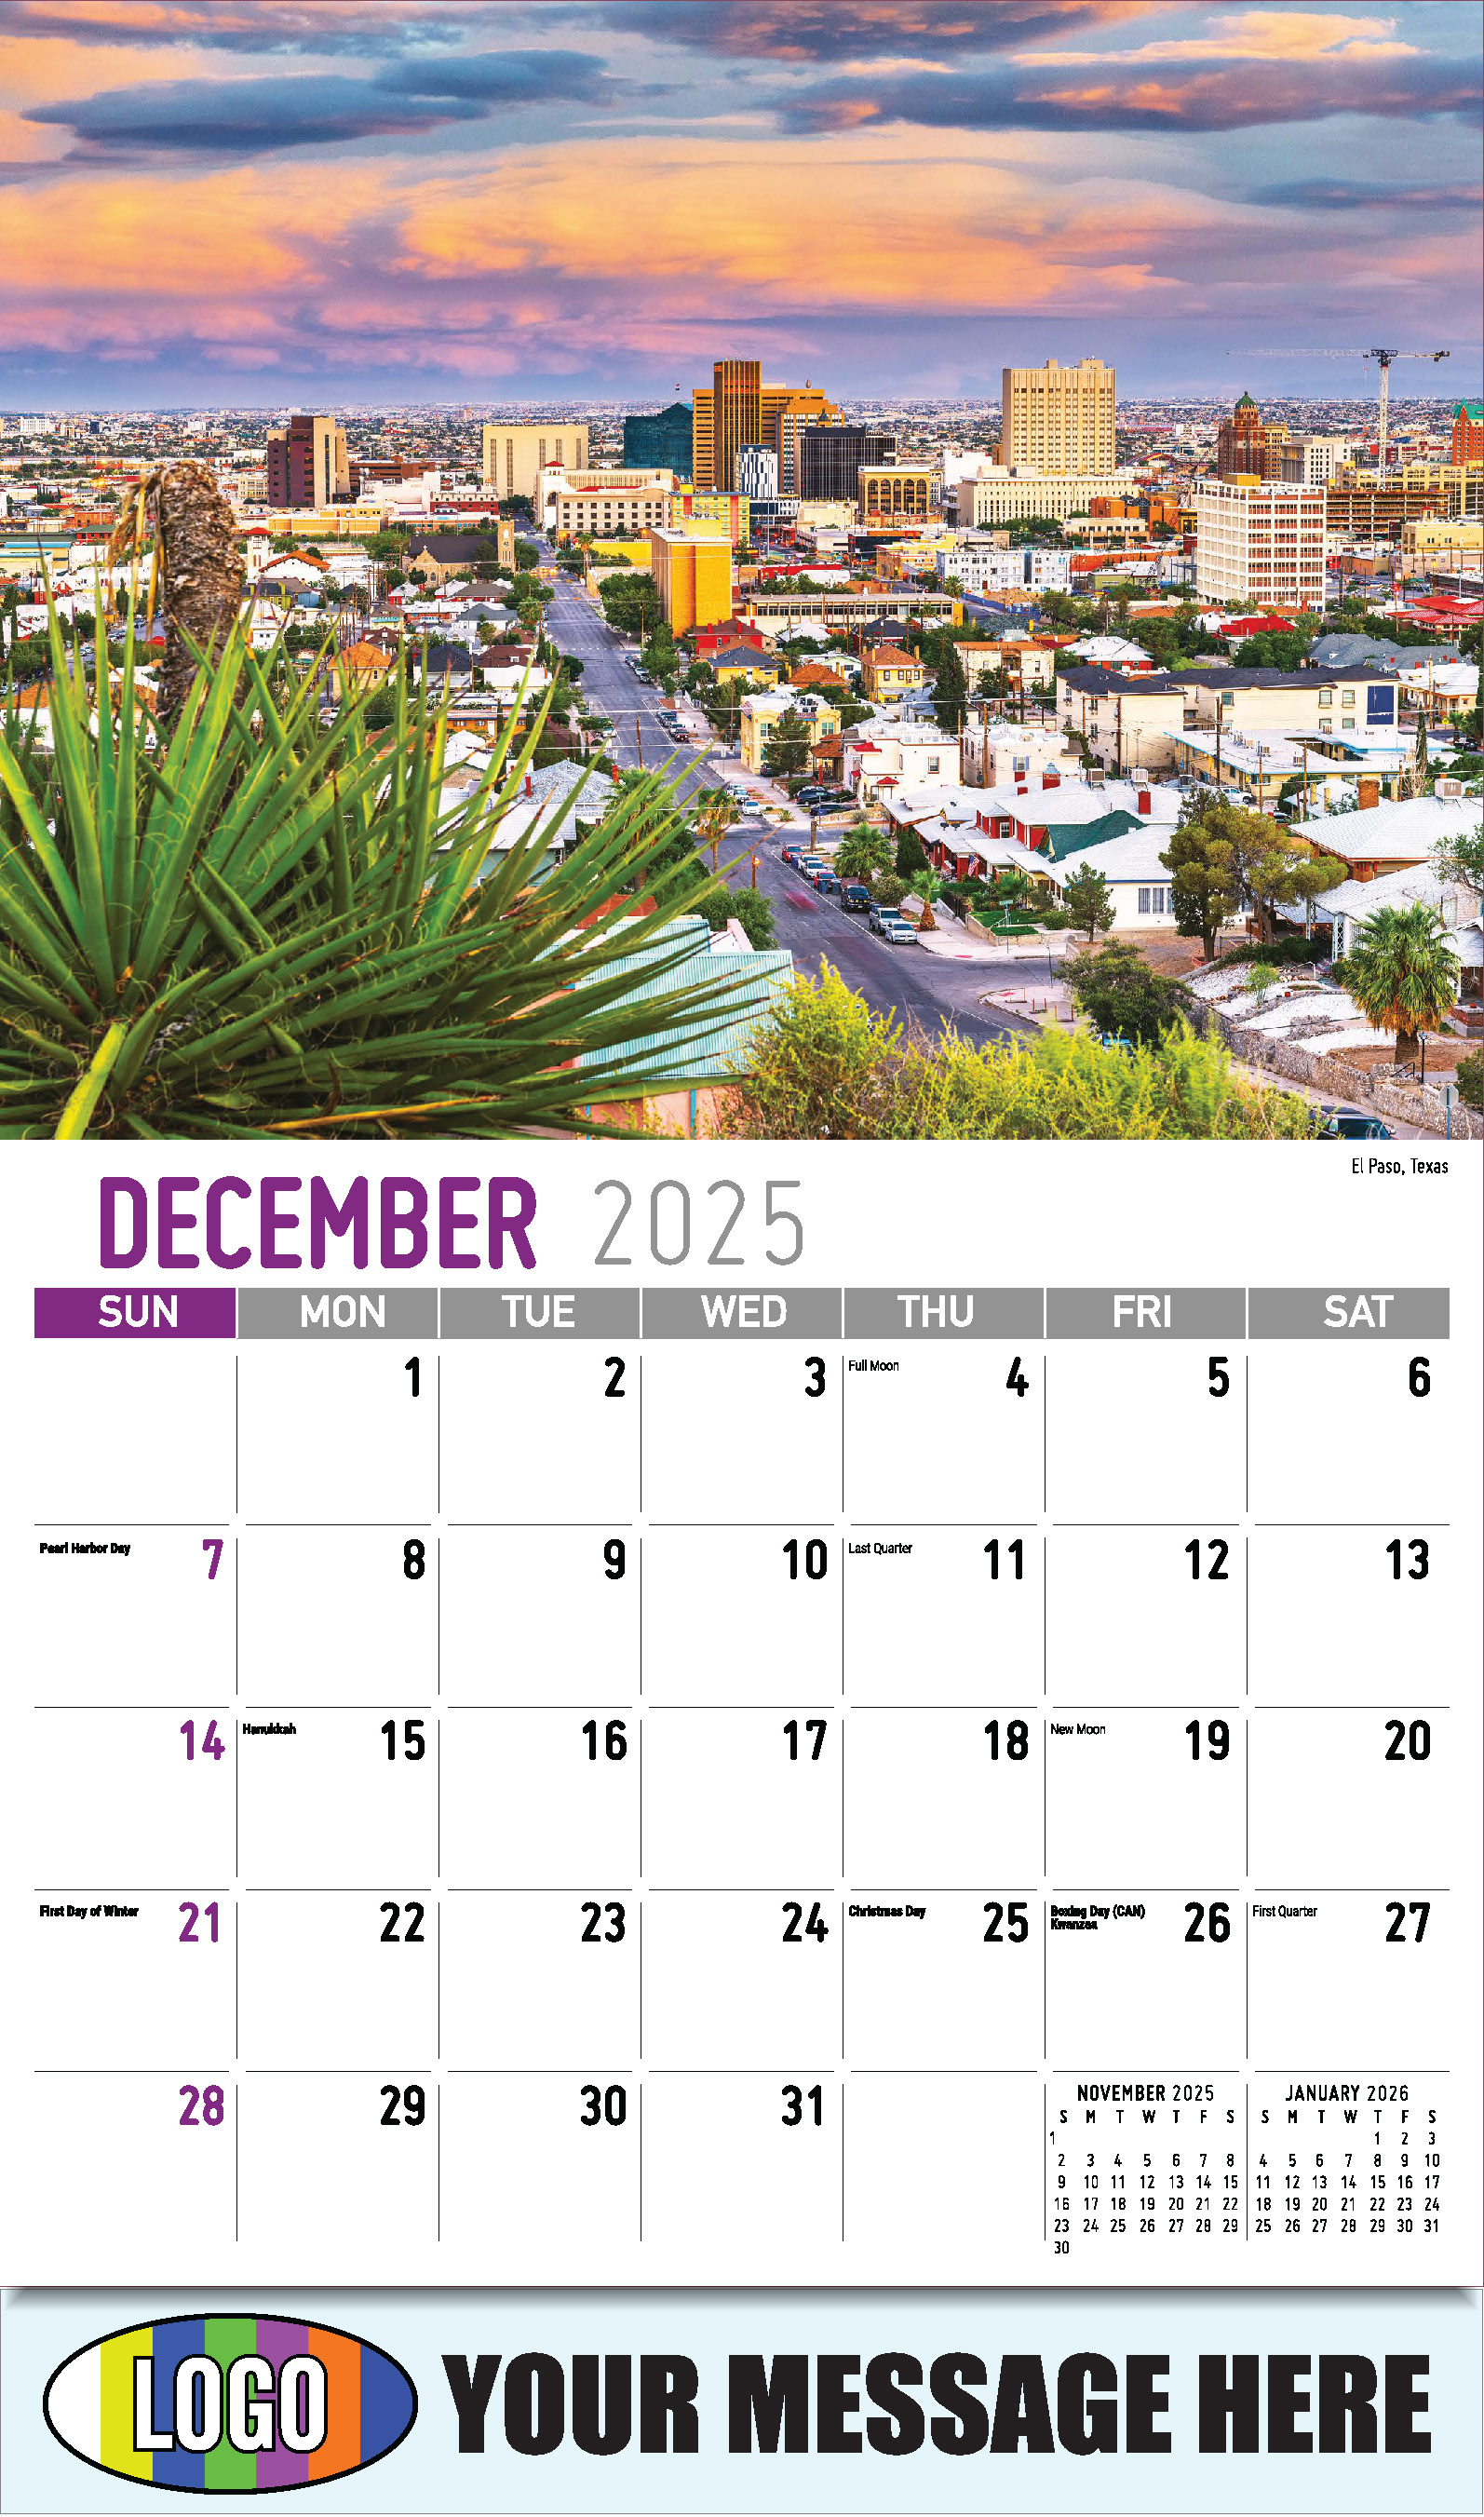 Scenes of Texas 2025 Business Advertising Calendar - December